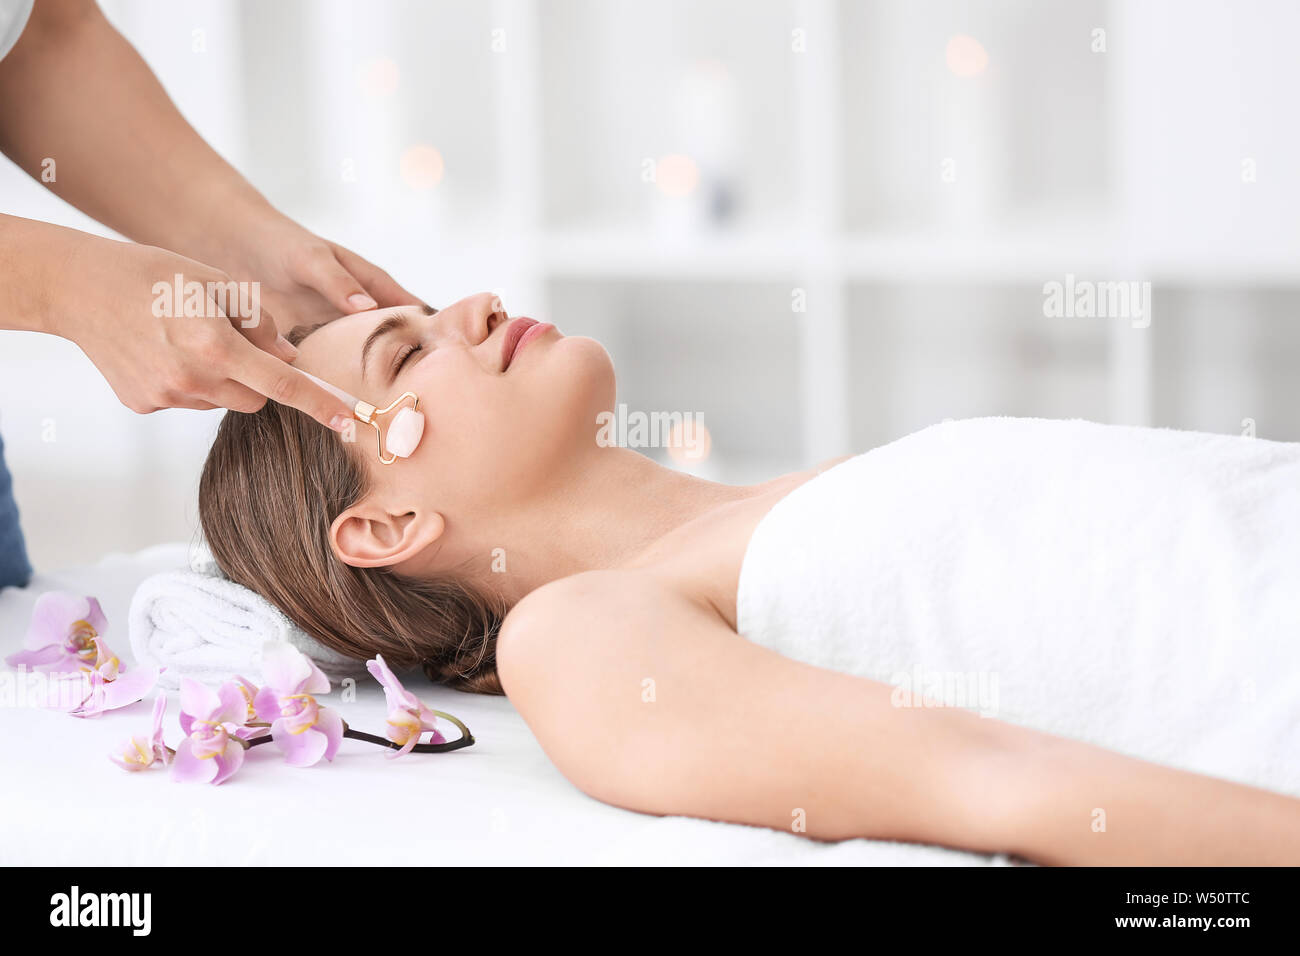 Beautiful young woman receiving facial massage in spa salon Stock Photo